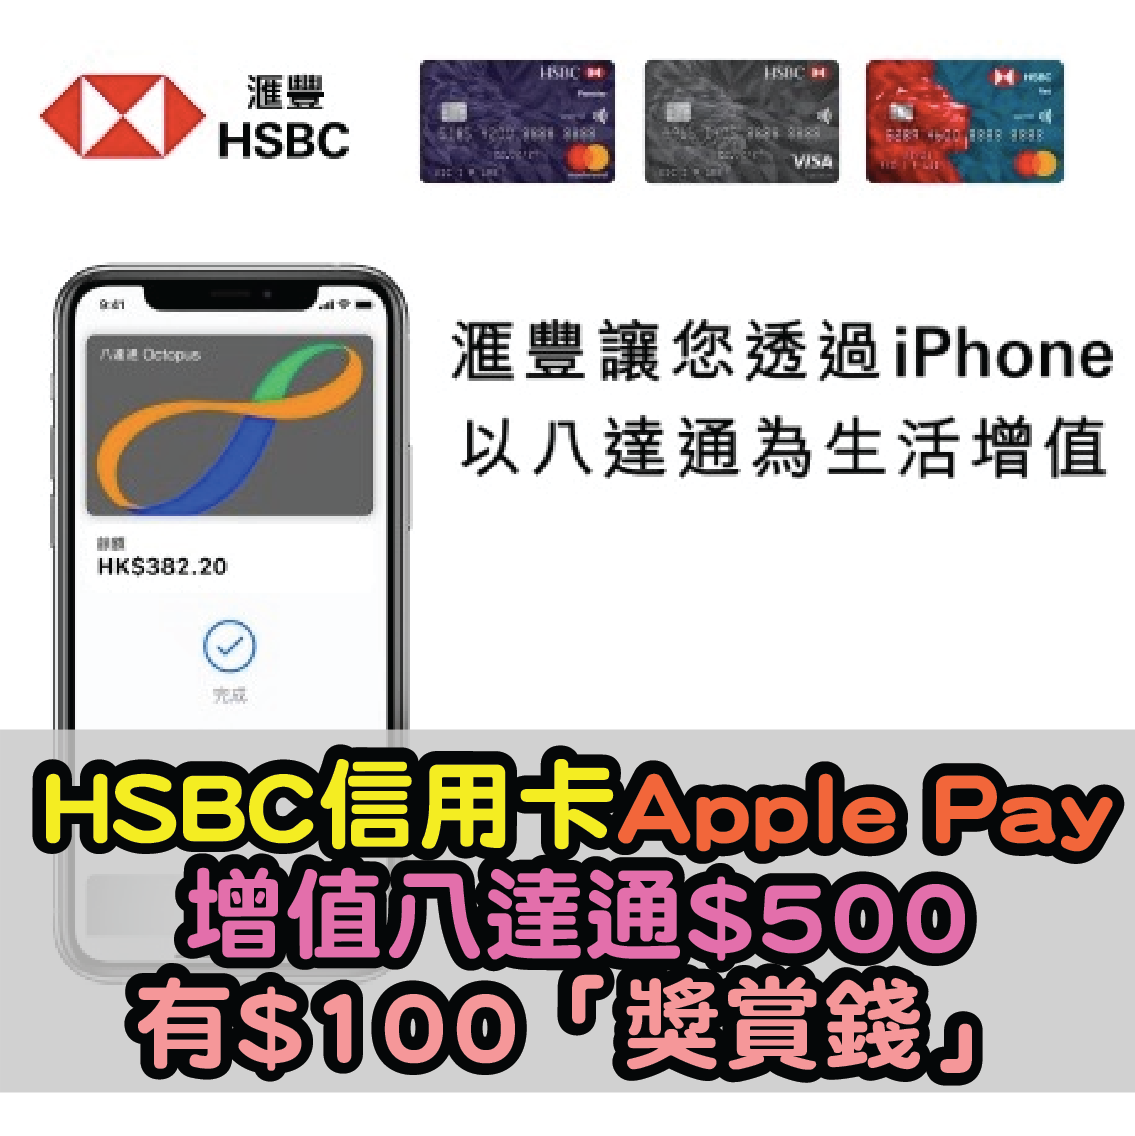 【HSBC信用卡八達通增值優惠】滿HK$500就有額外$100「獎賞錢」啦！